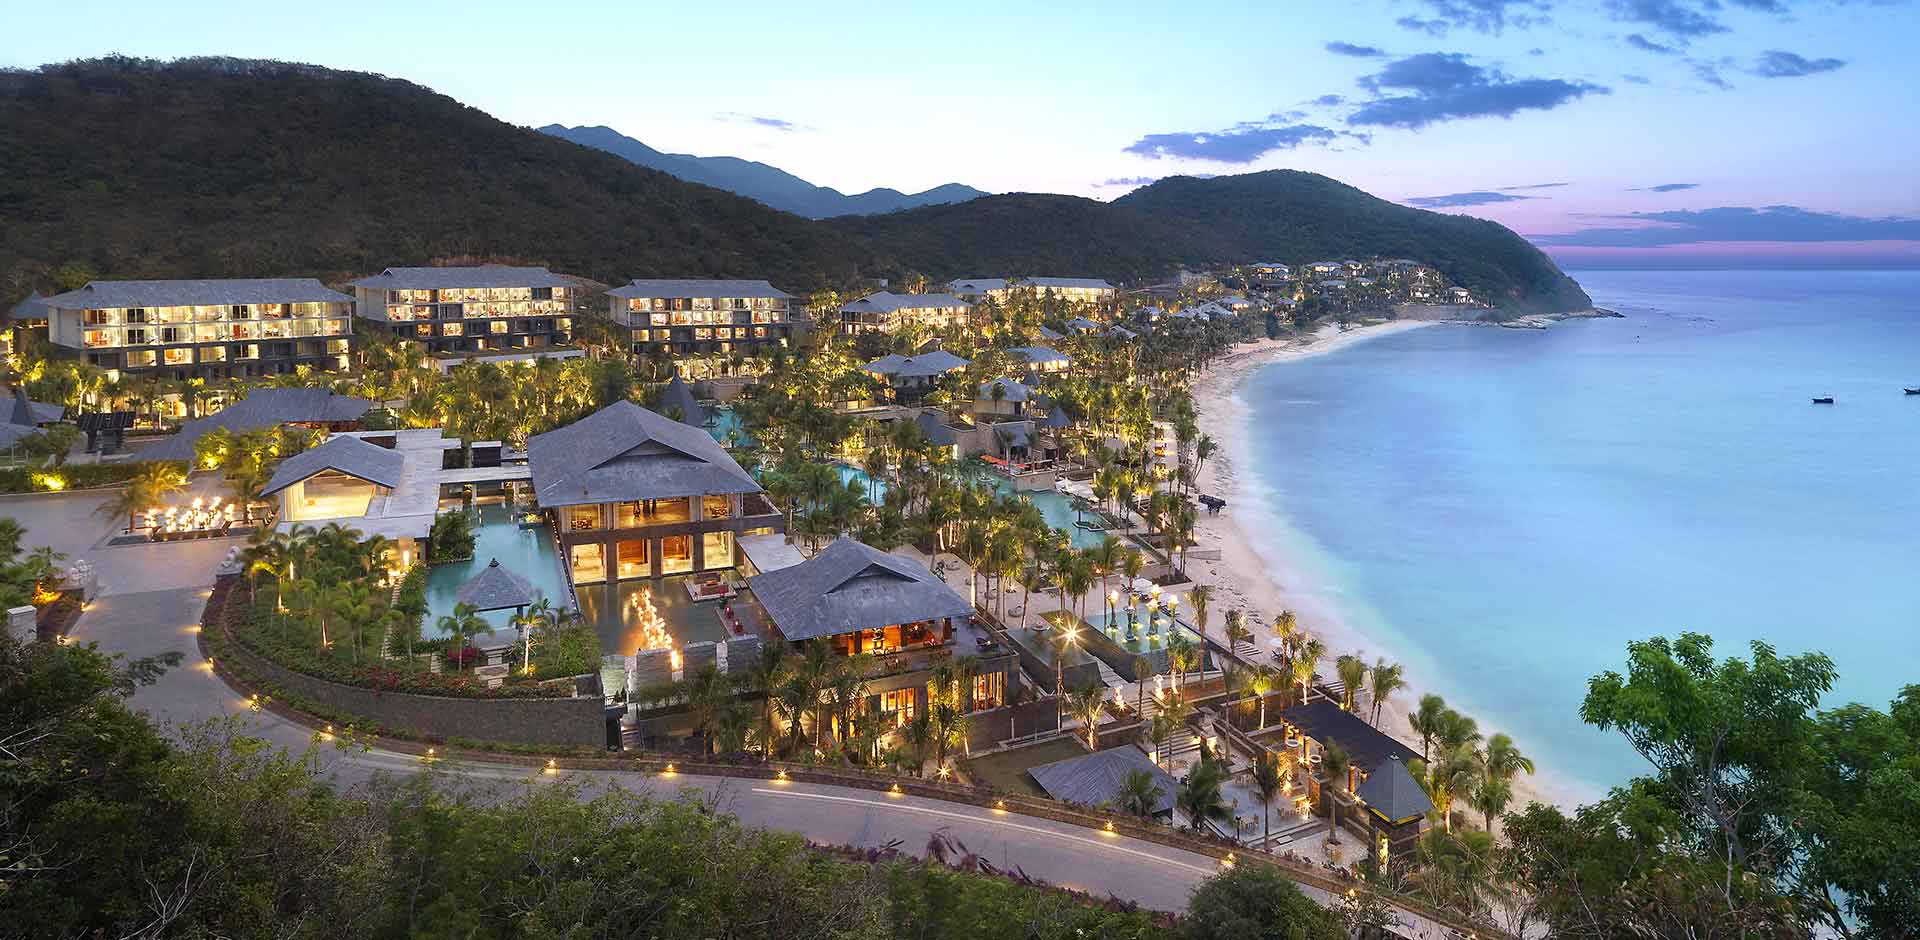 Mandarin Oriental Sanya | Hainan China Luxury Hotels Resorts | Remote Lands